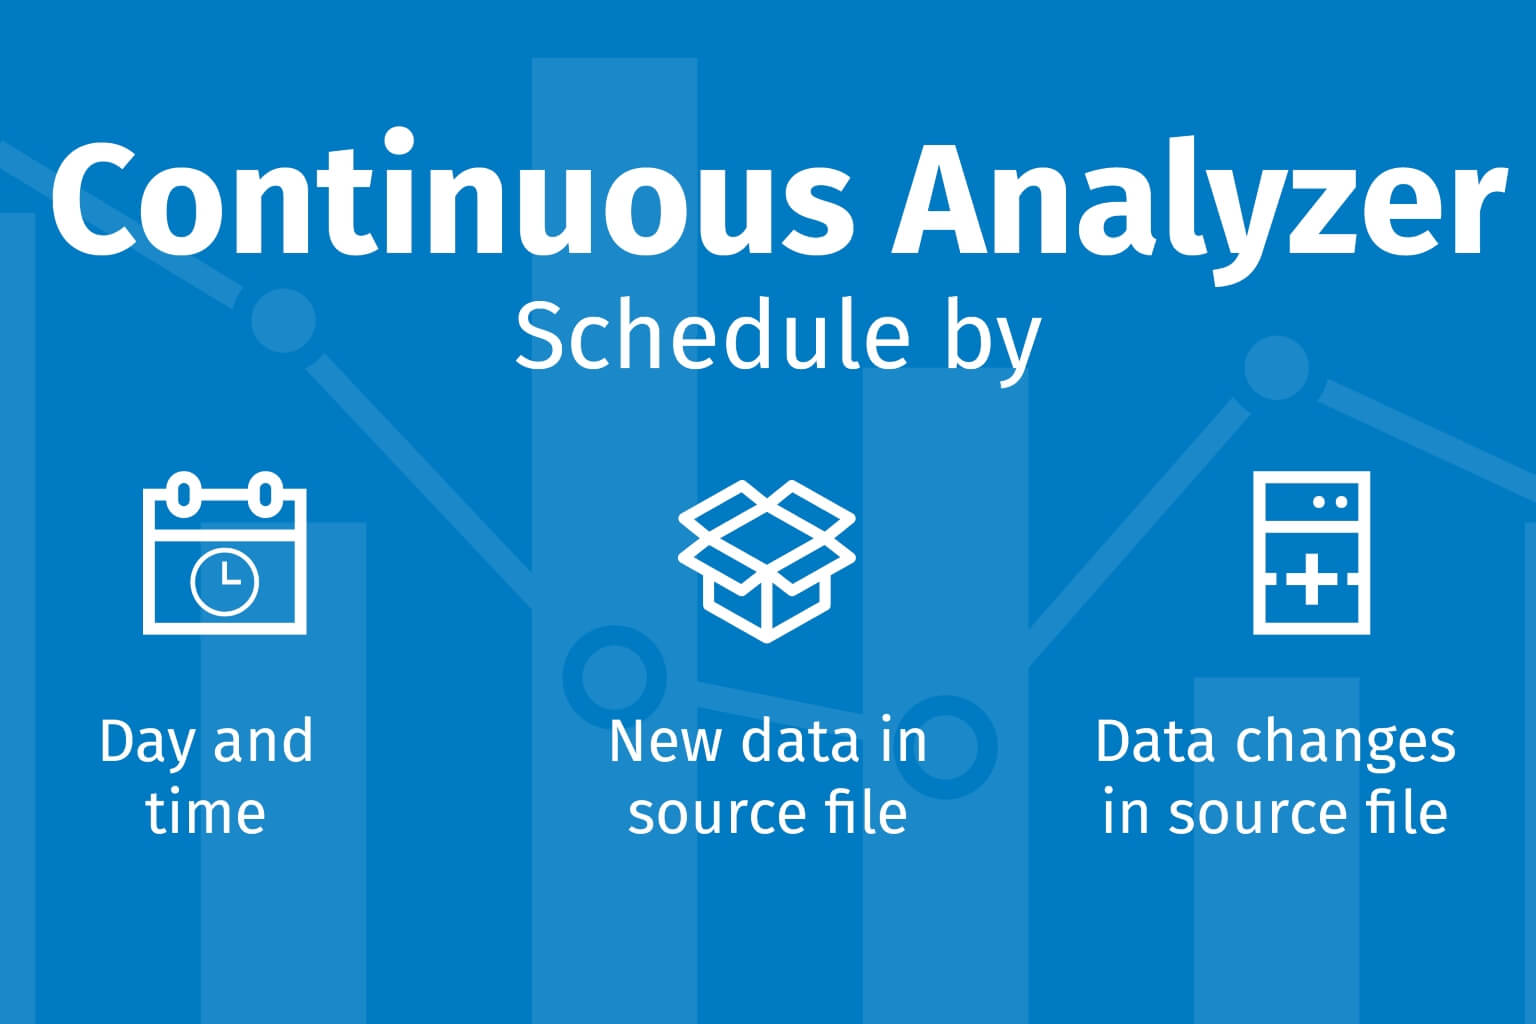 TeamMate Analytics core capabilities Continuous Analyzer video walkthrough still